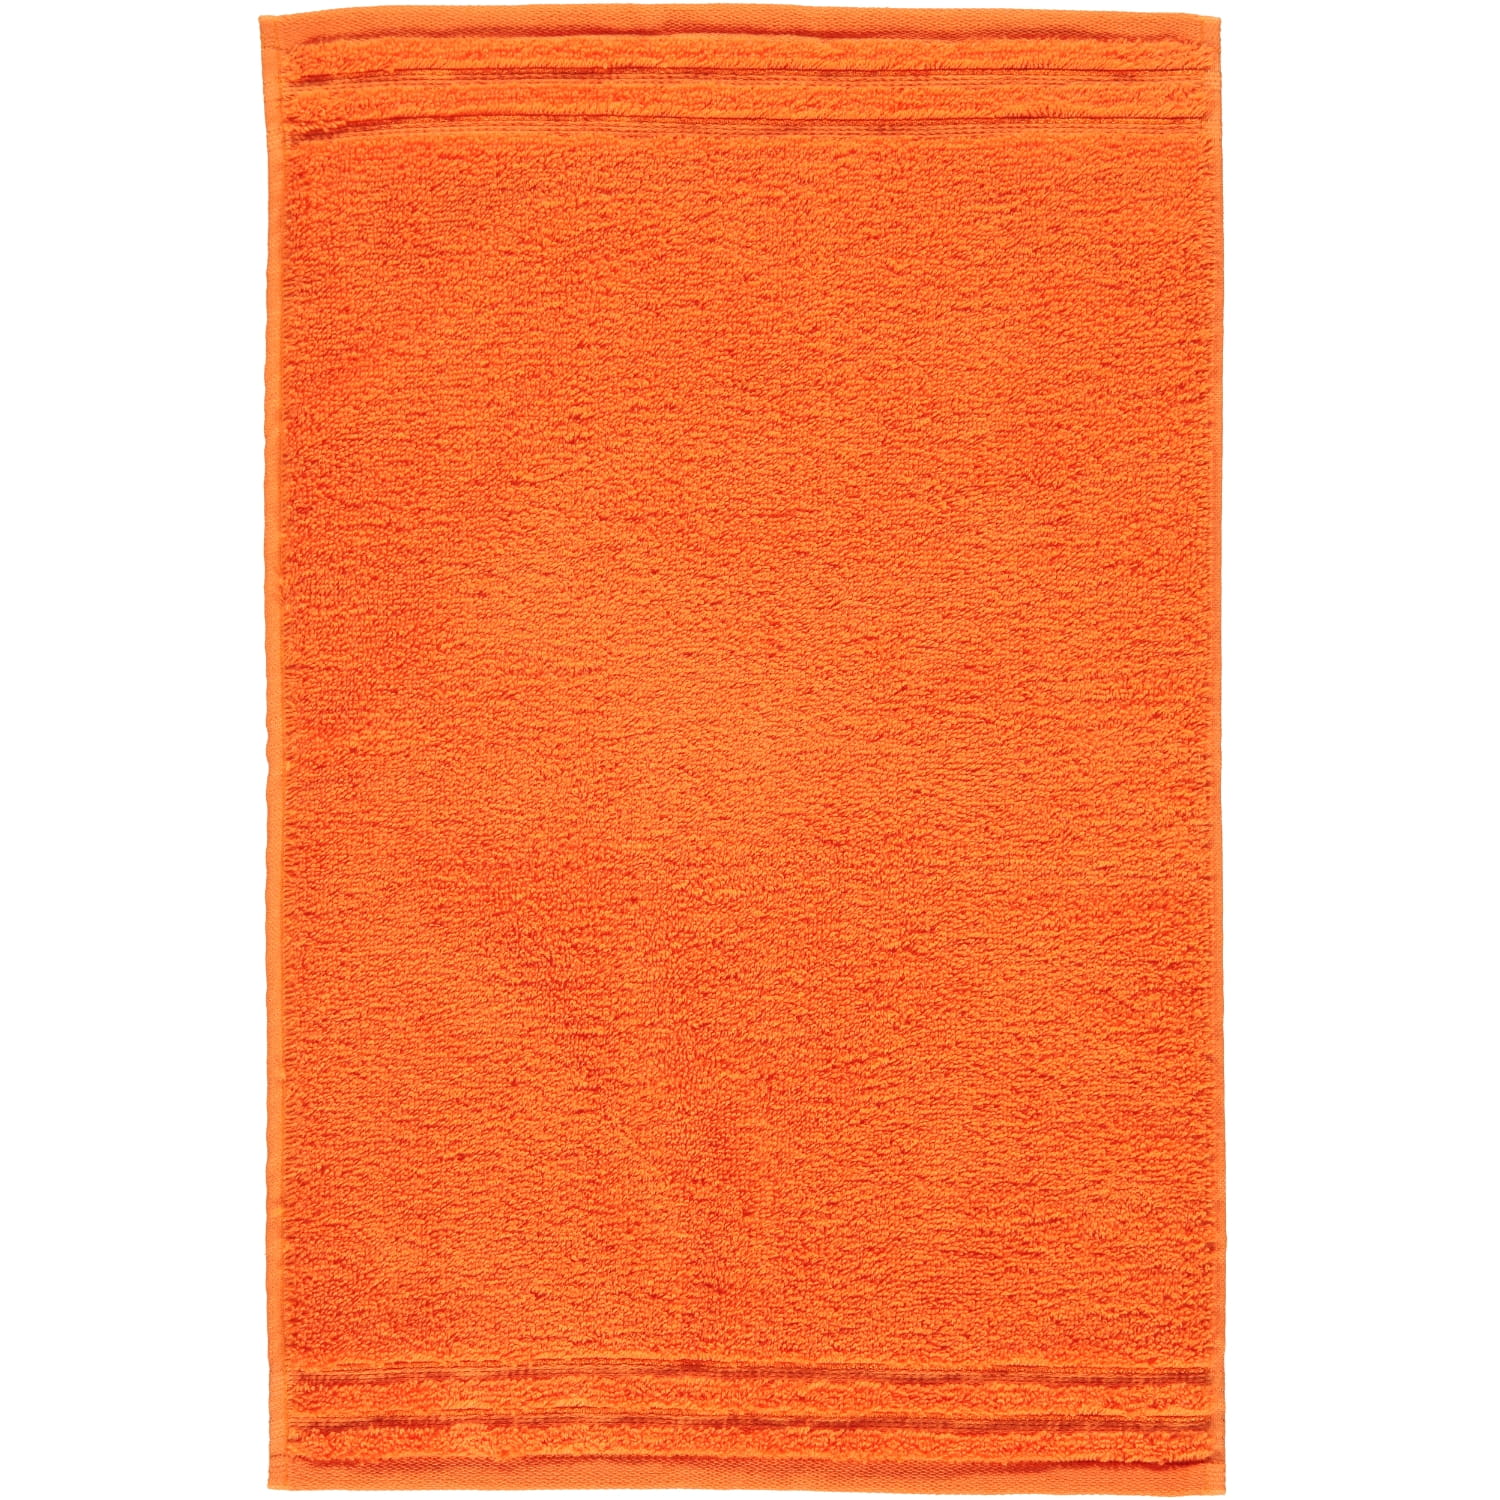 Vossen Calypso Feeling - 255 Farbe: Marken Vossen orange | - Vossen | Handtücher 